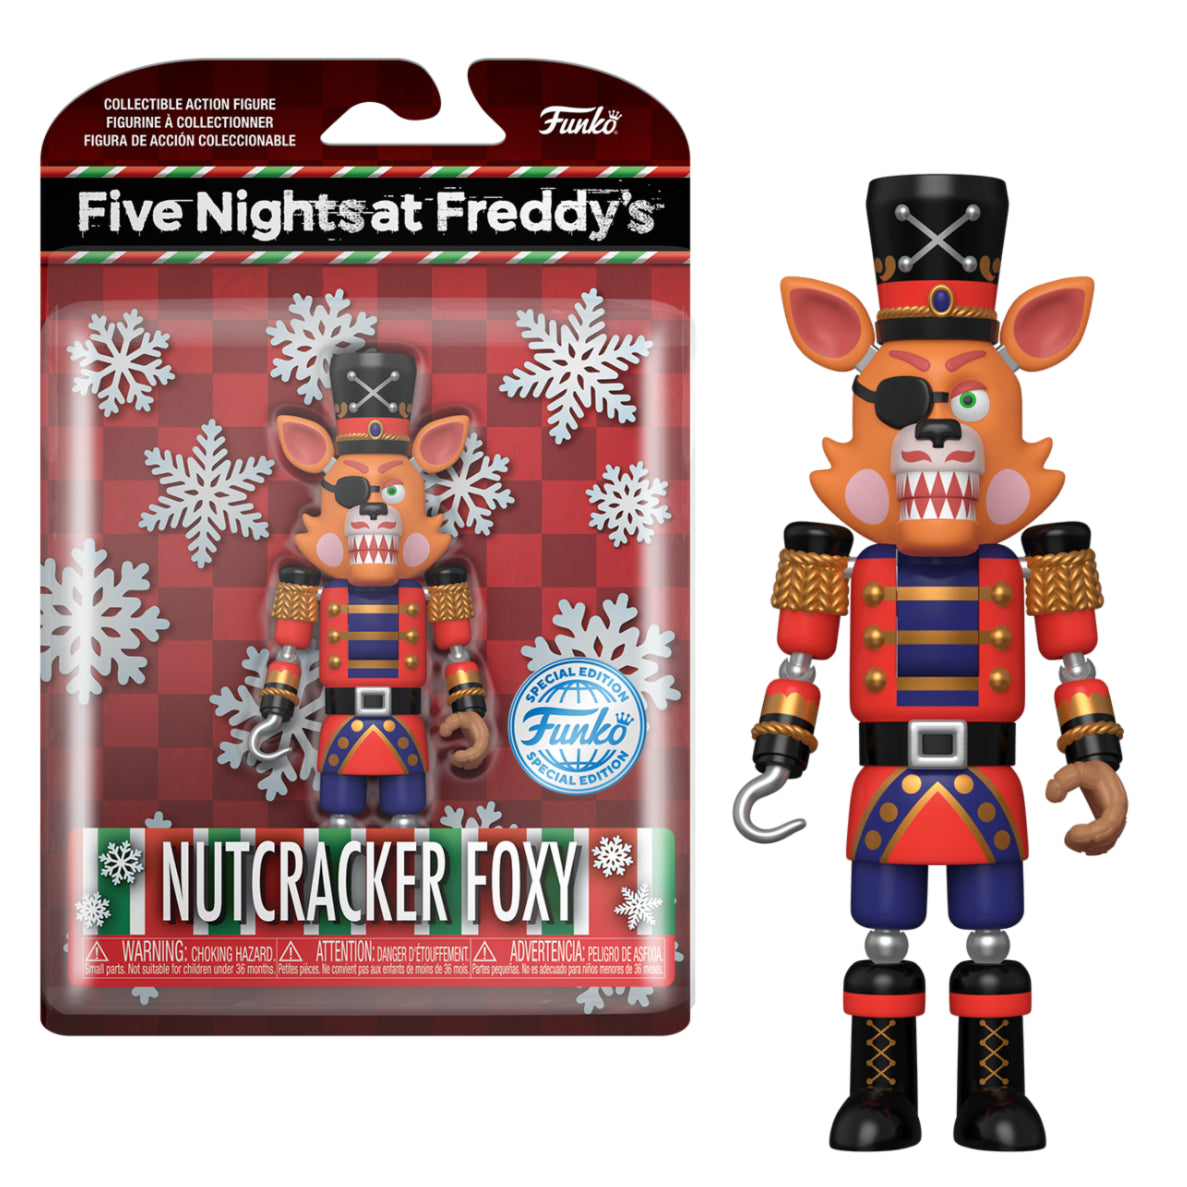 Nutcracker Foxy (SE)